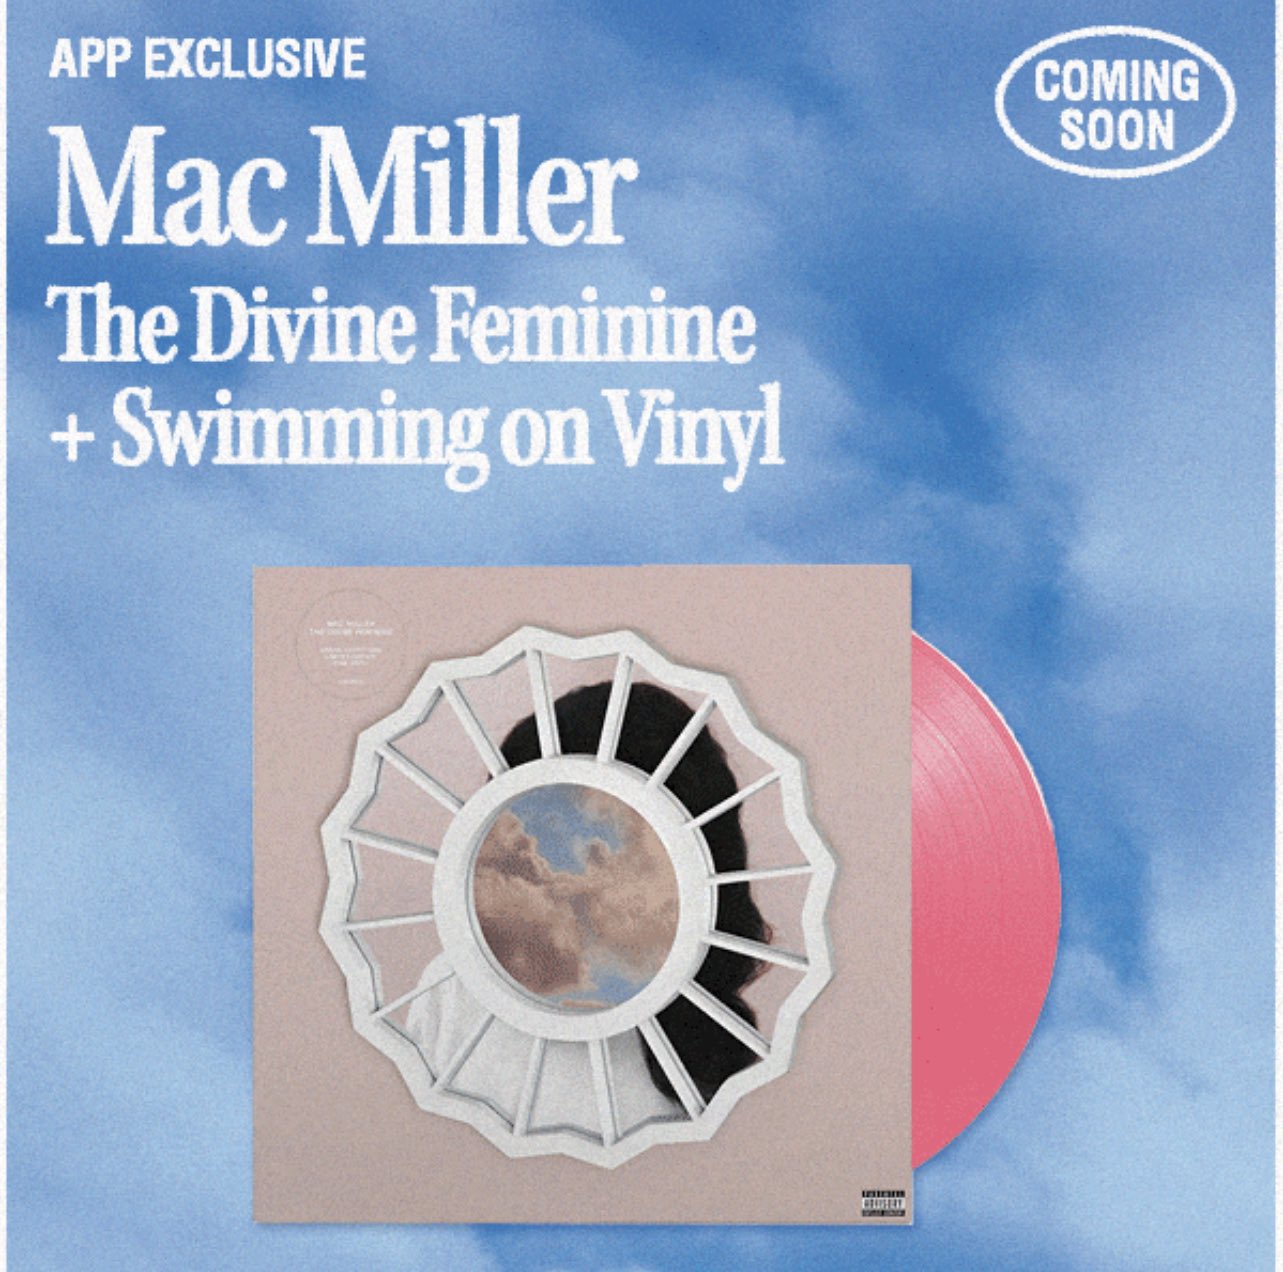 Afvigelse mærke strøm ً on Twitter: "Mac Miller — The Divine Feminine Pink Vinyl Repress  *UPCOMING RELEASE* tomorrow. only through the UO APP!  https://t.co/BmiYCJqdyk" / Twitter